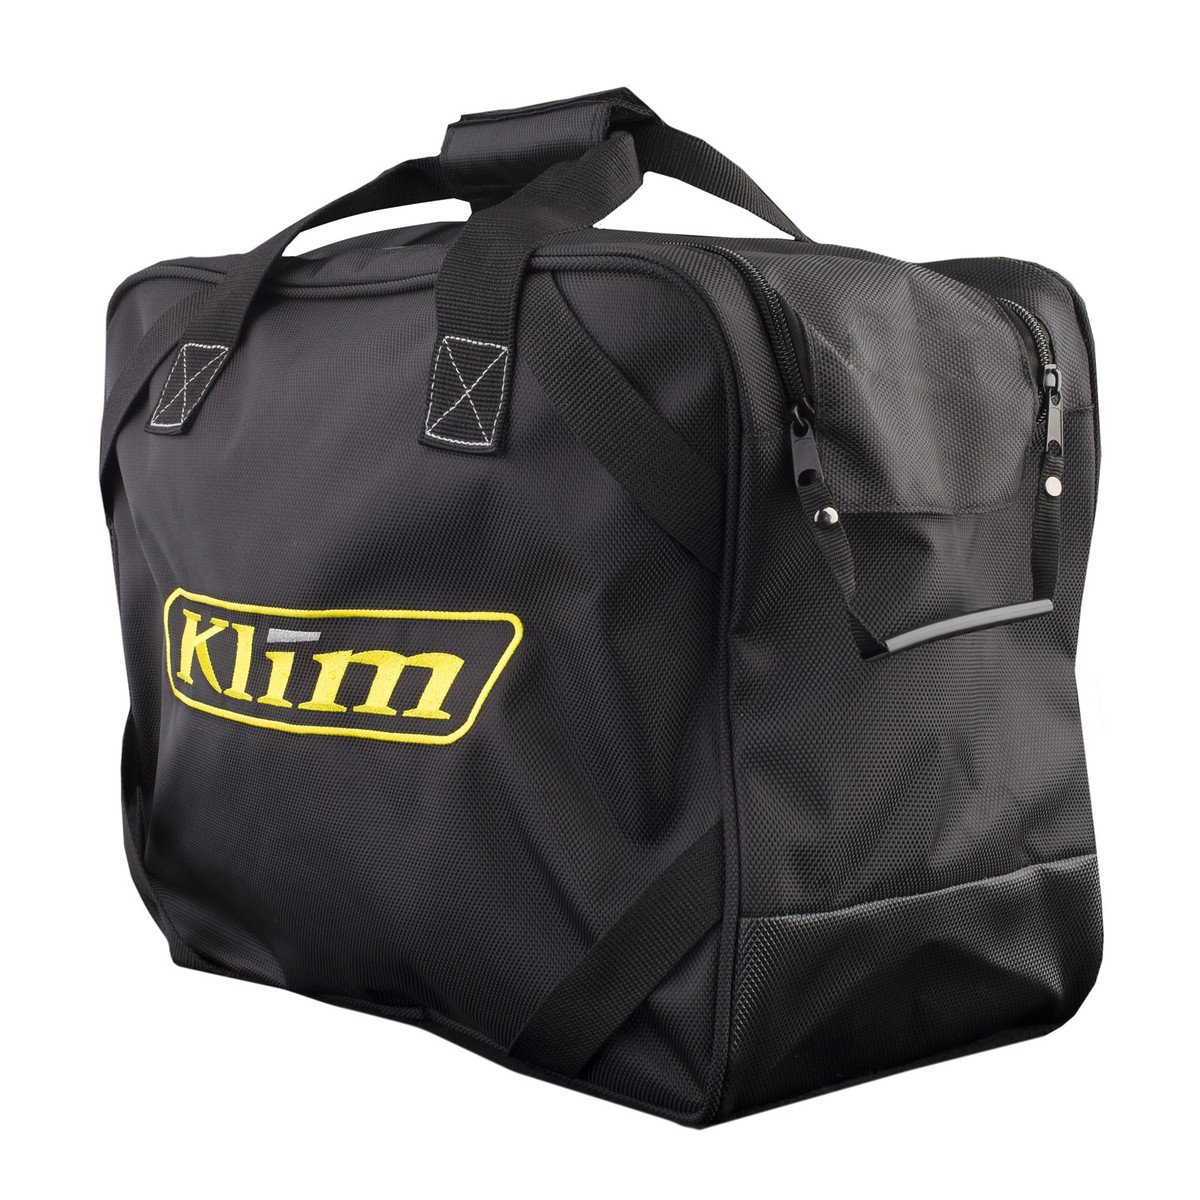 Main image of Klim Helmet Bag